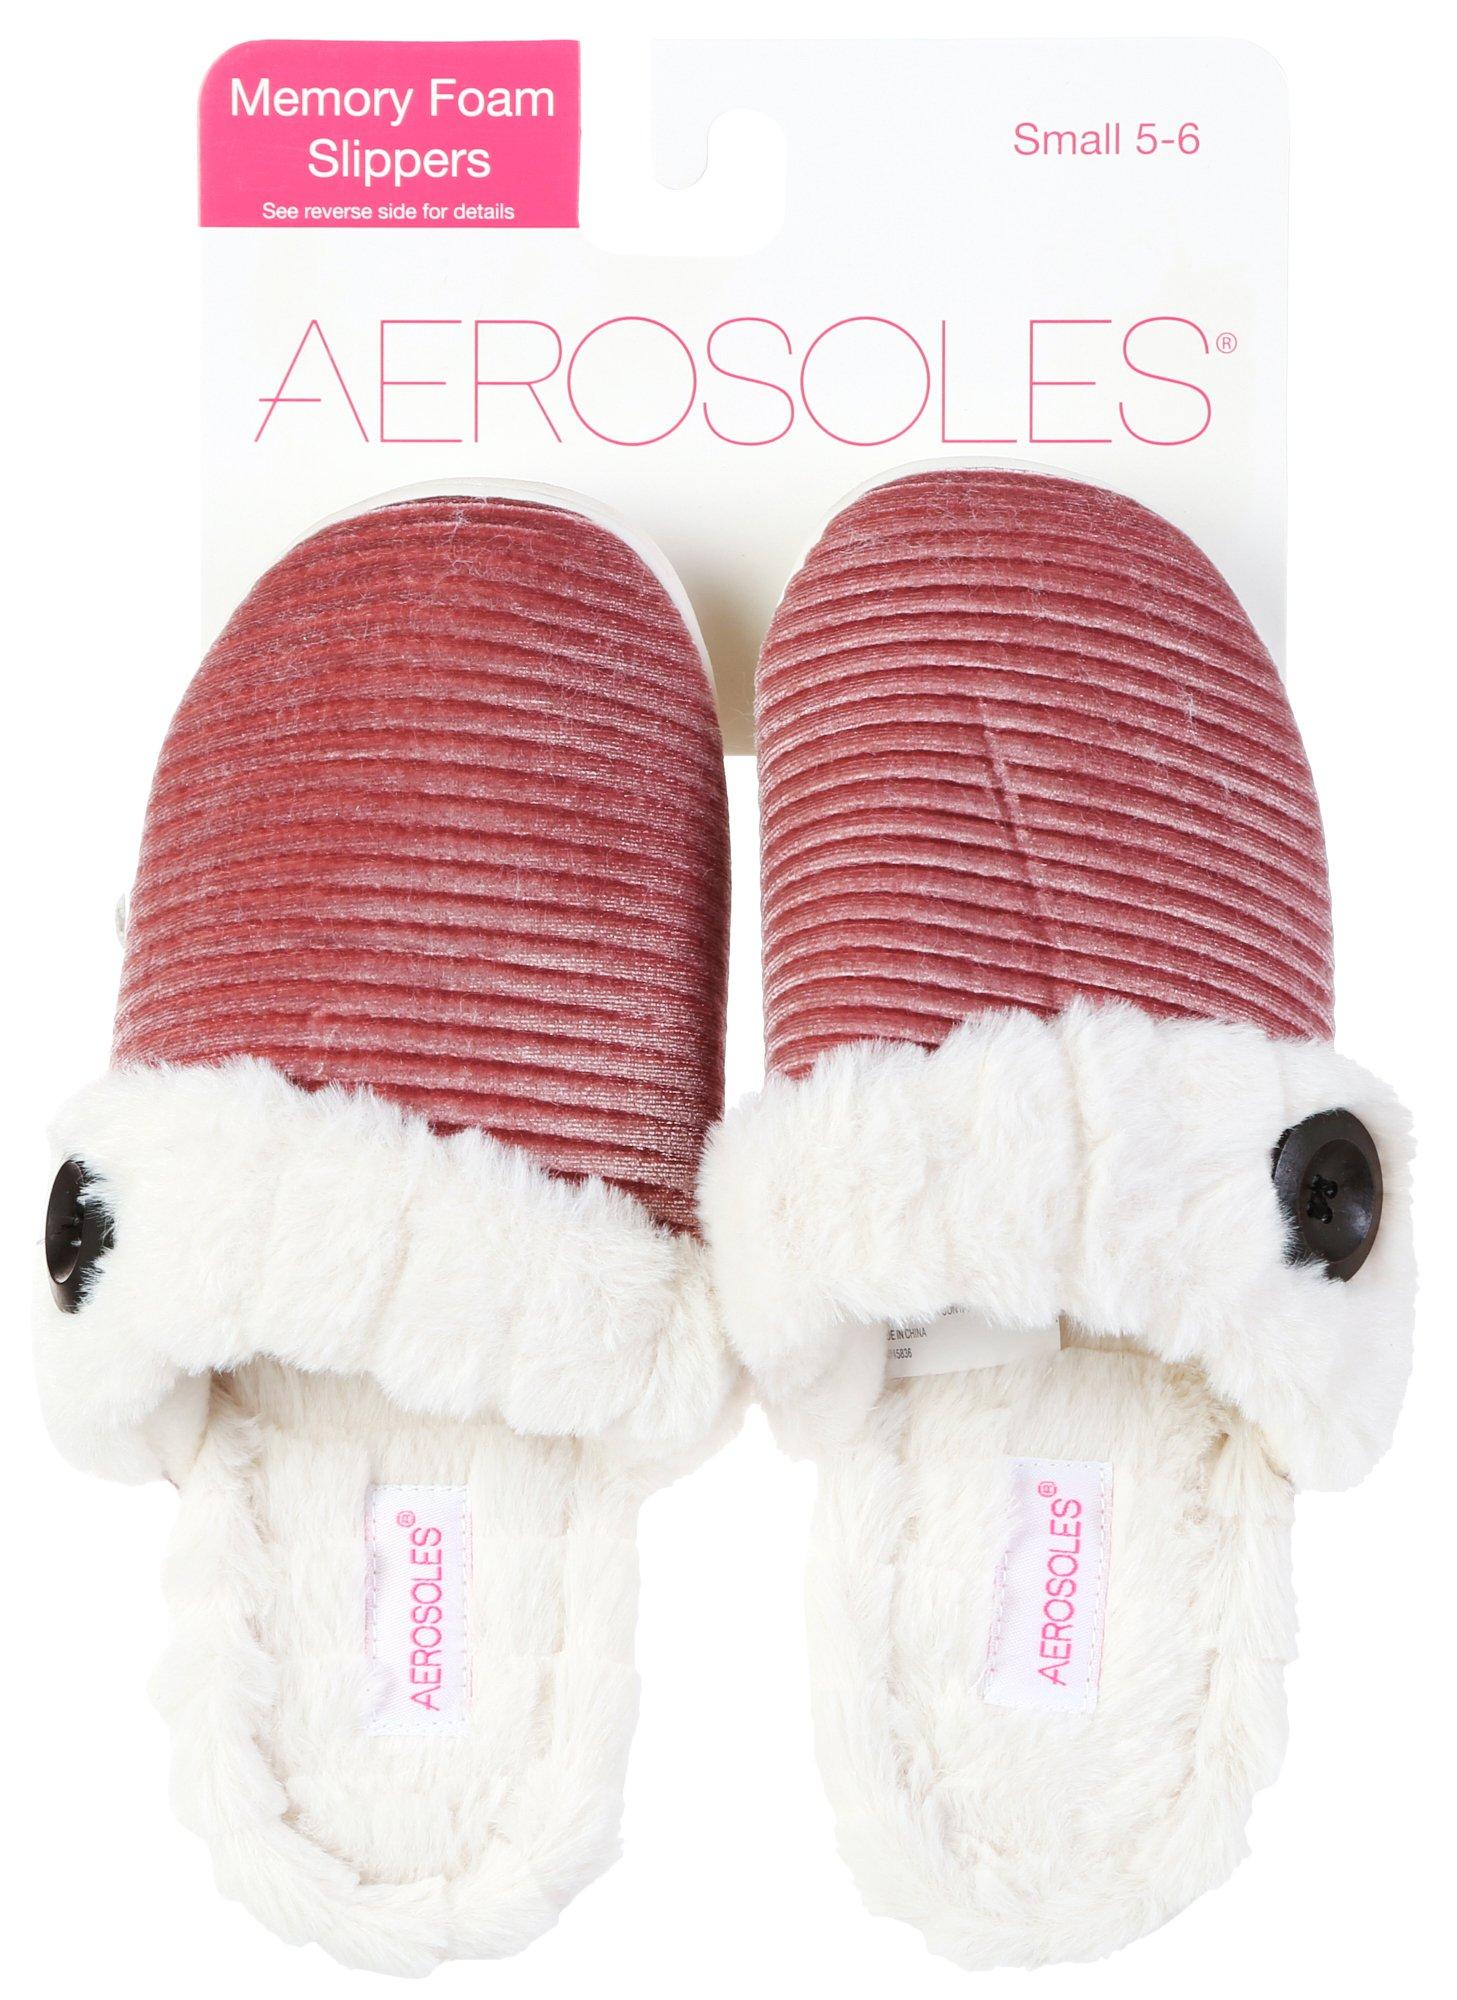 aerosoles memory foam slippers